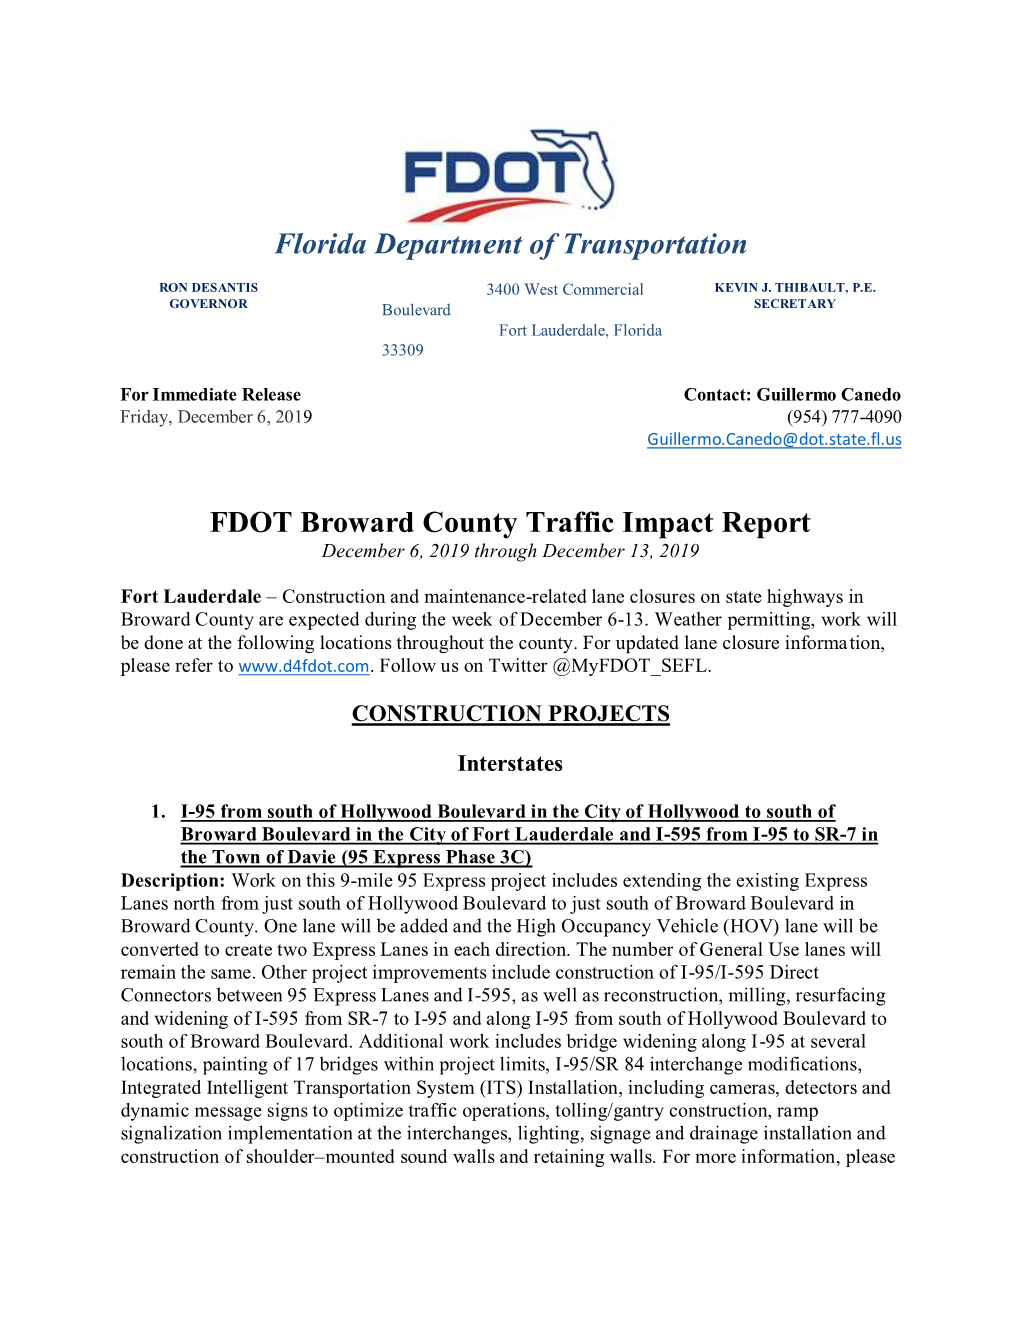 Florida Department of Transportation FDOT Broward County Traffic